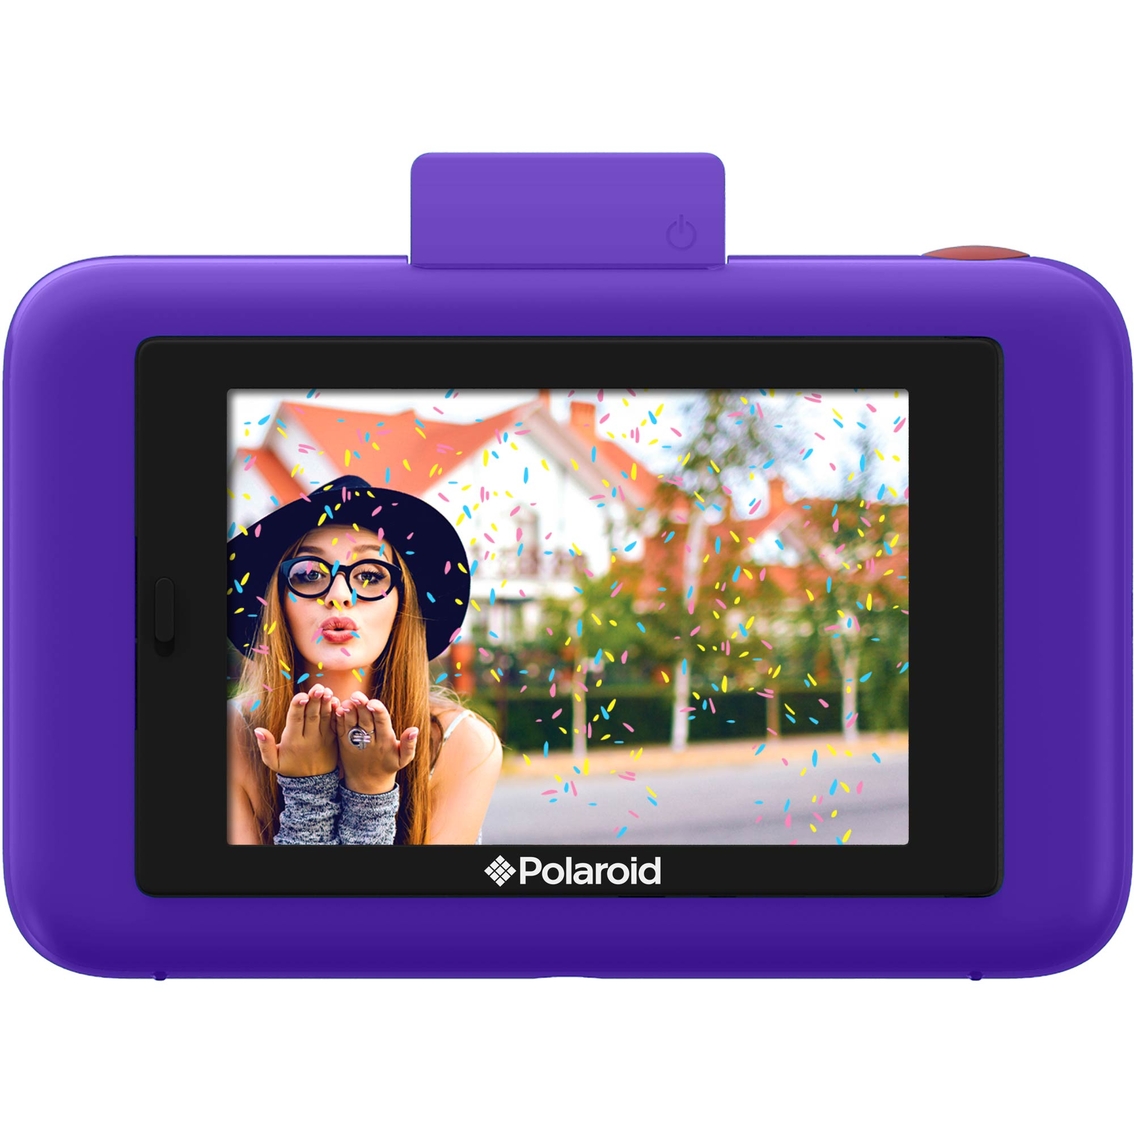 Polaroid Snap Touch Digital Camera - Image 3 of 4